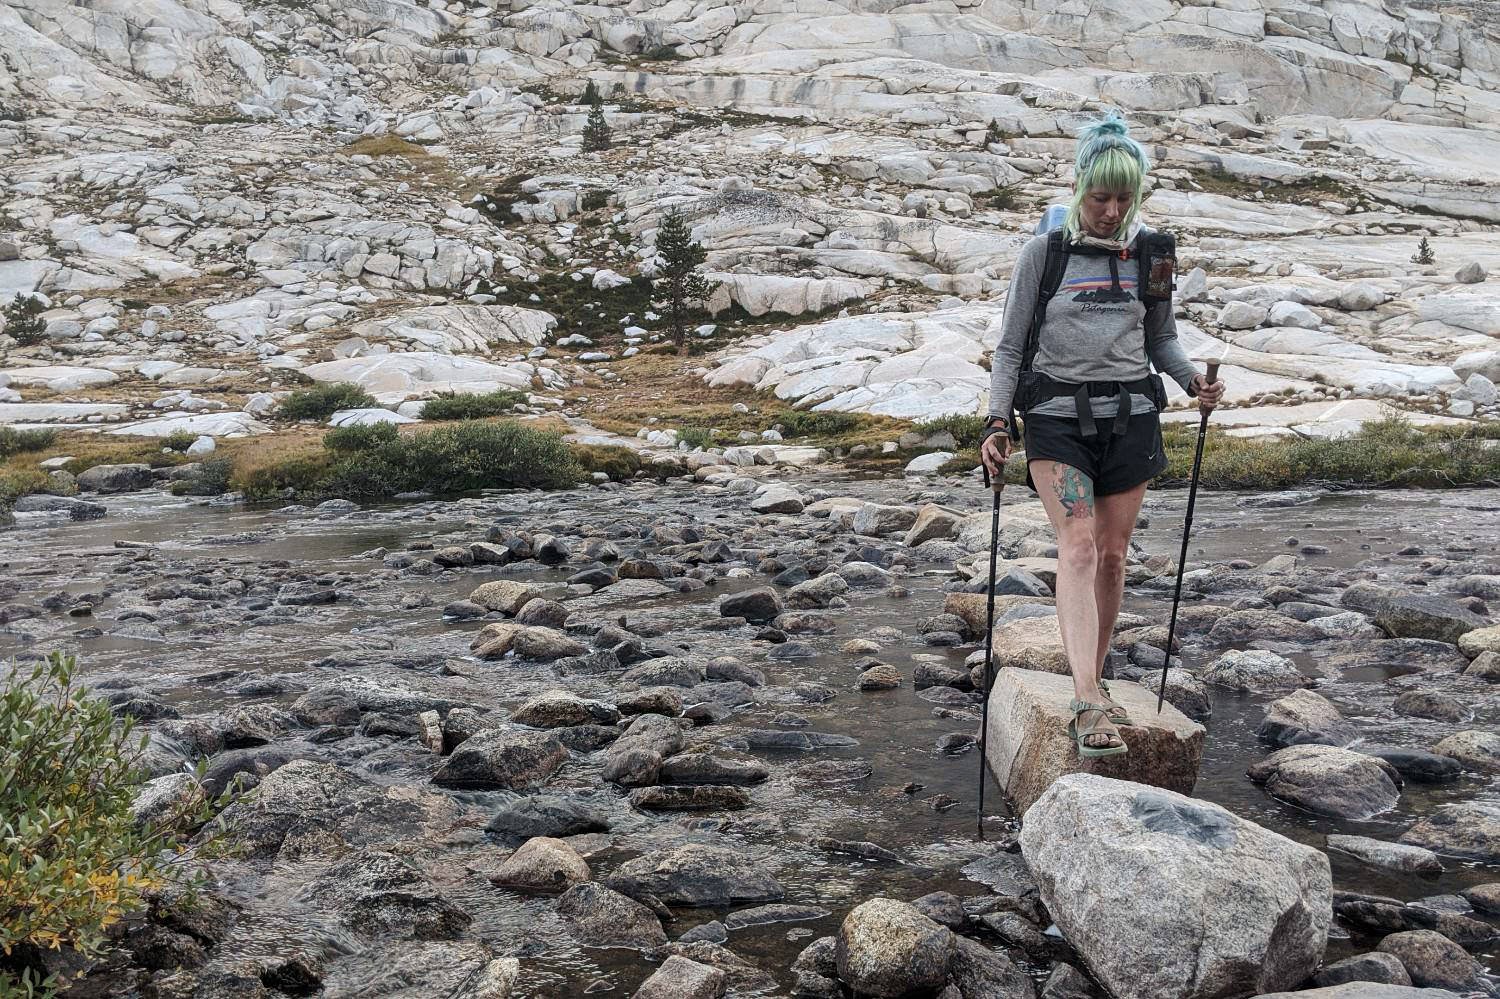 A hiker holding the Gossamer Gear LT5 trekking poles while crossing a river